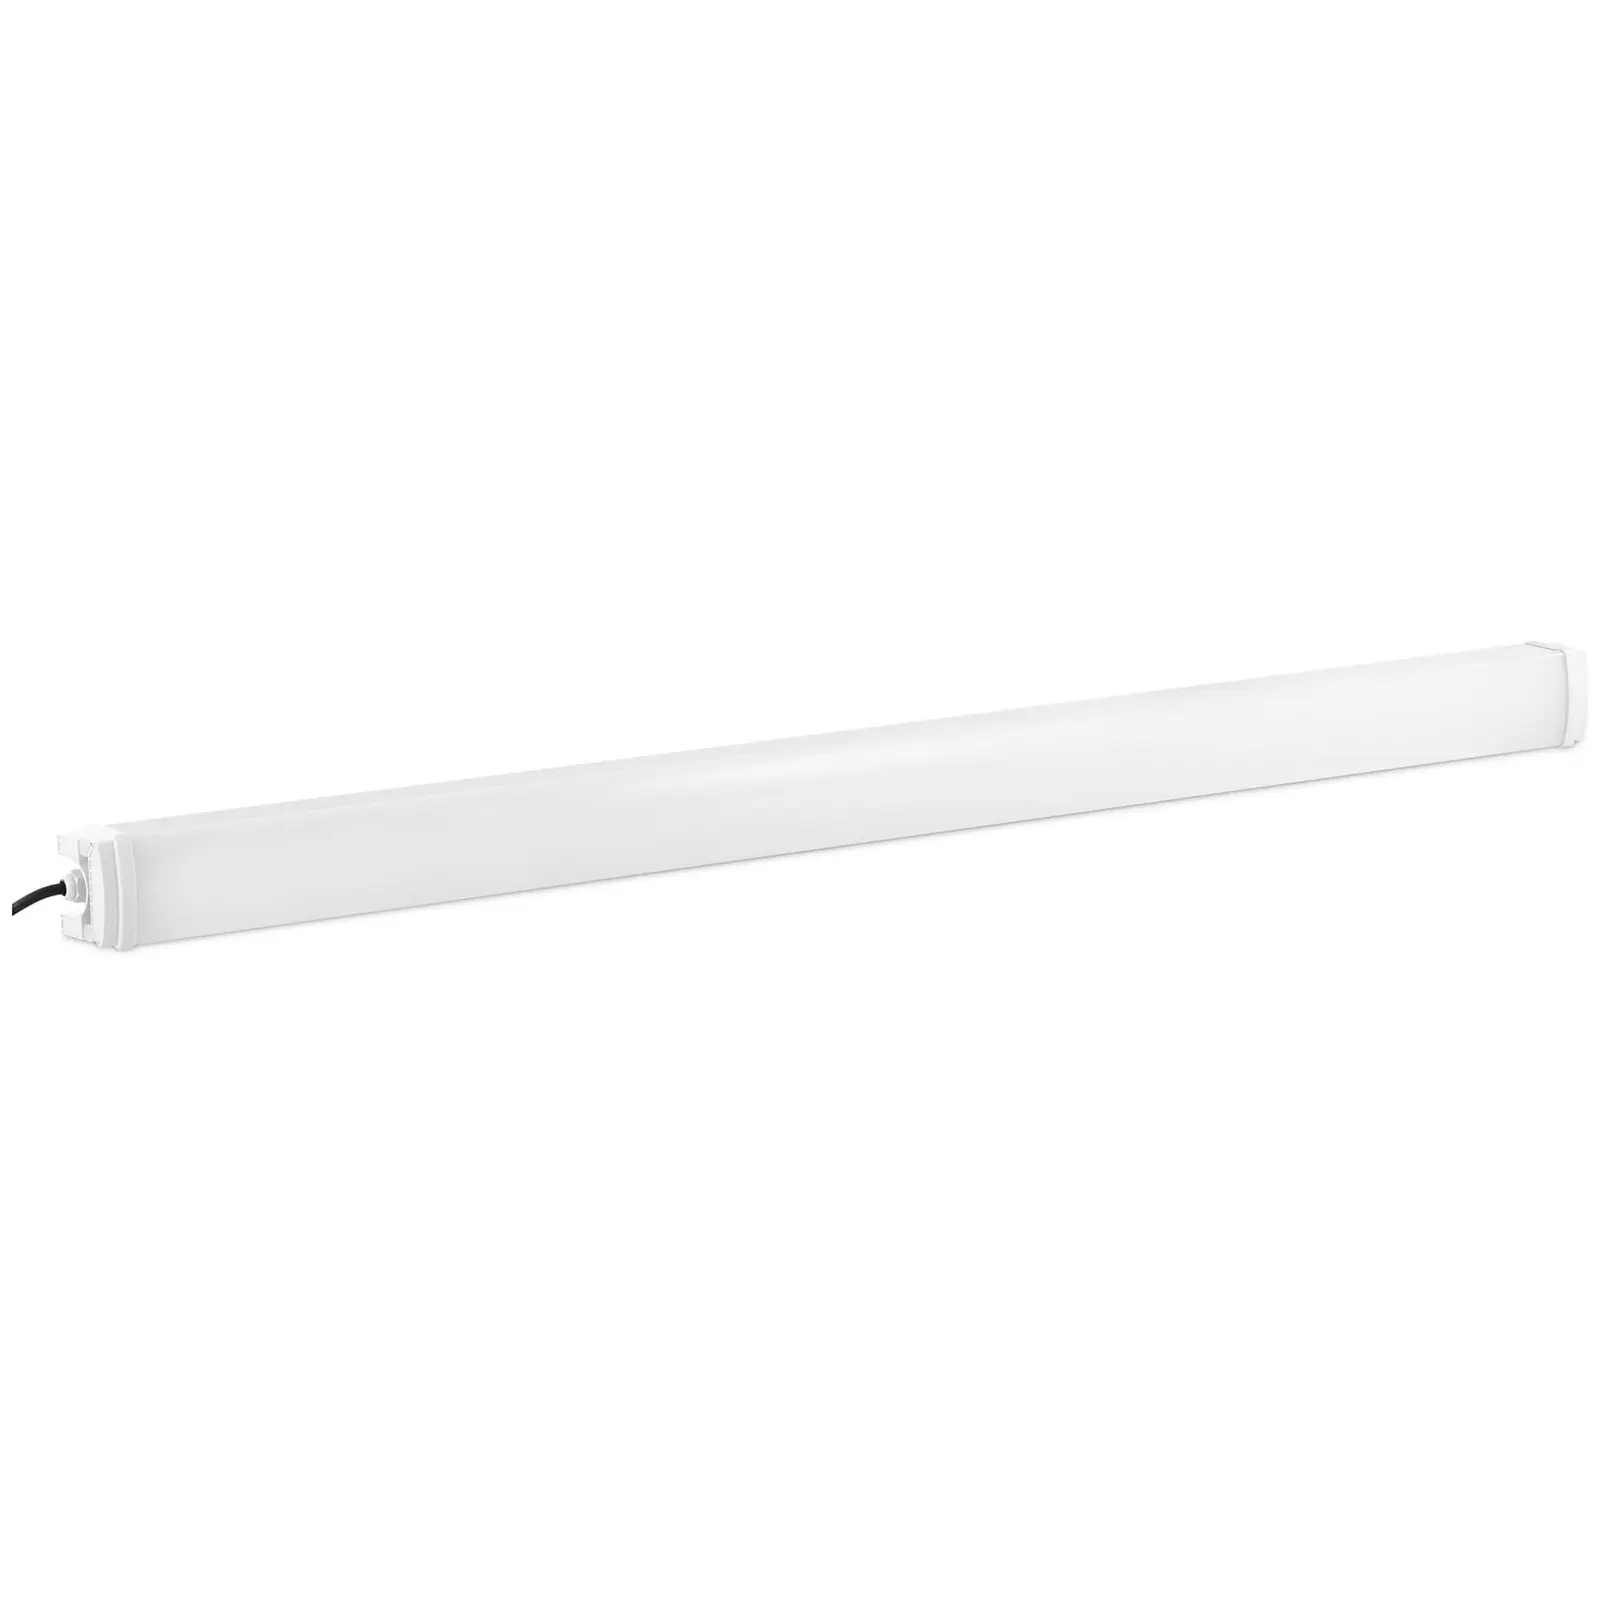 LED impermeabile - 60 W - 150 cm